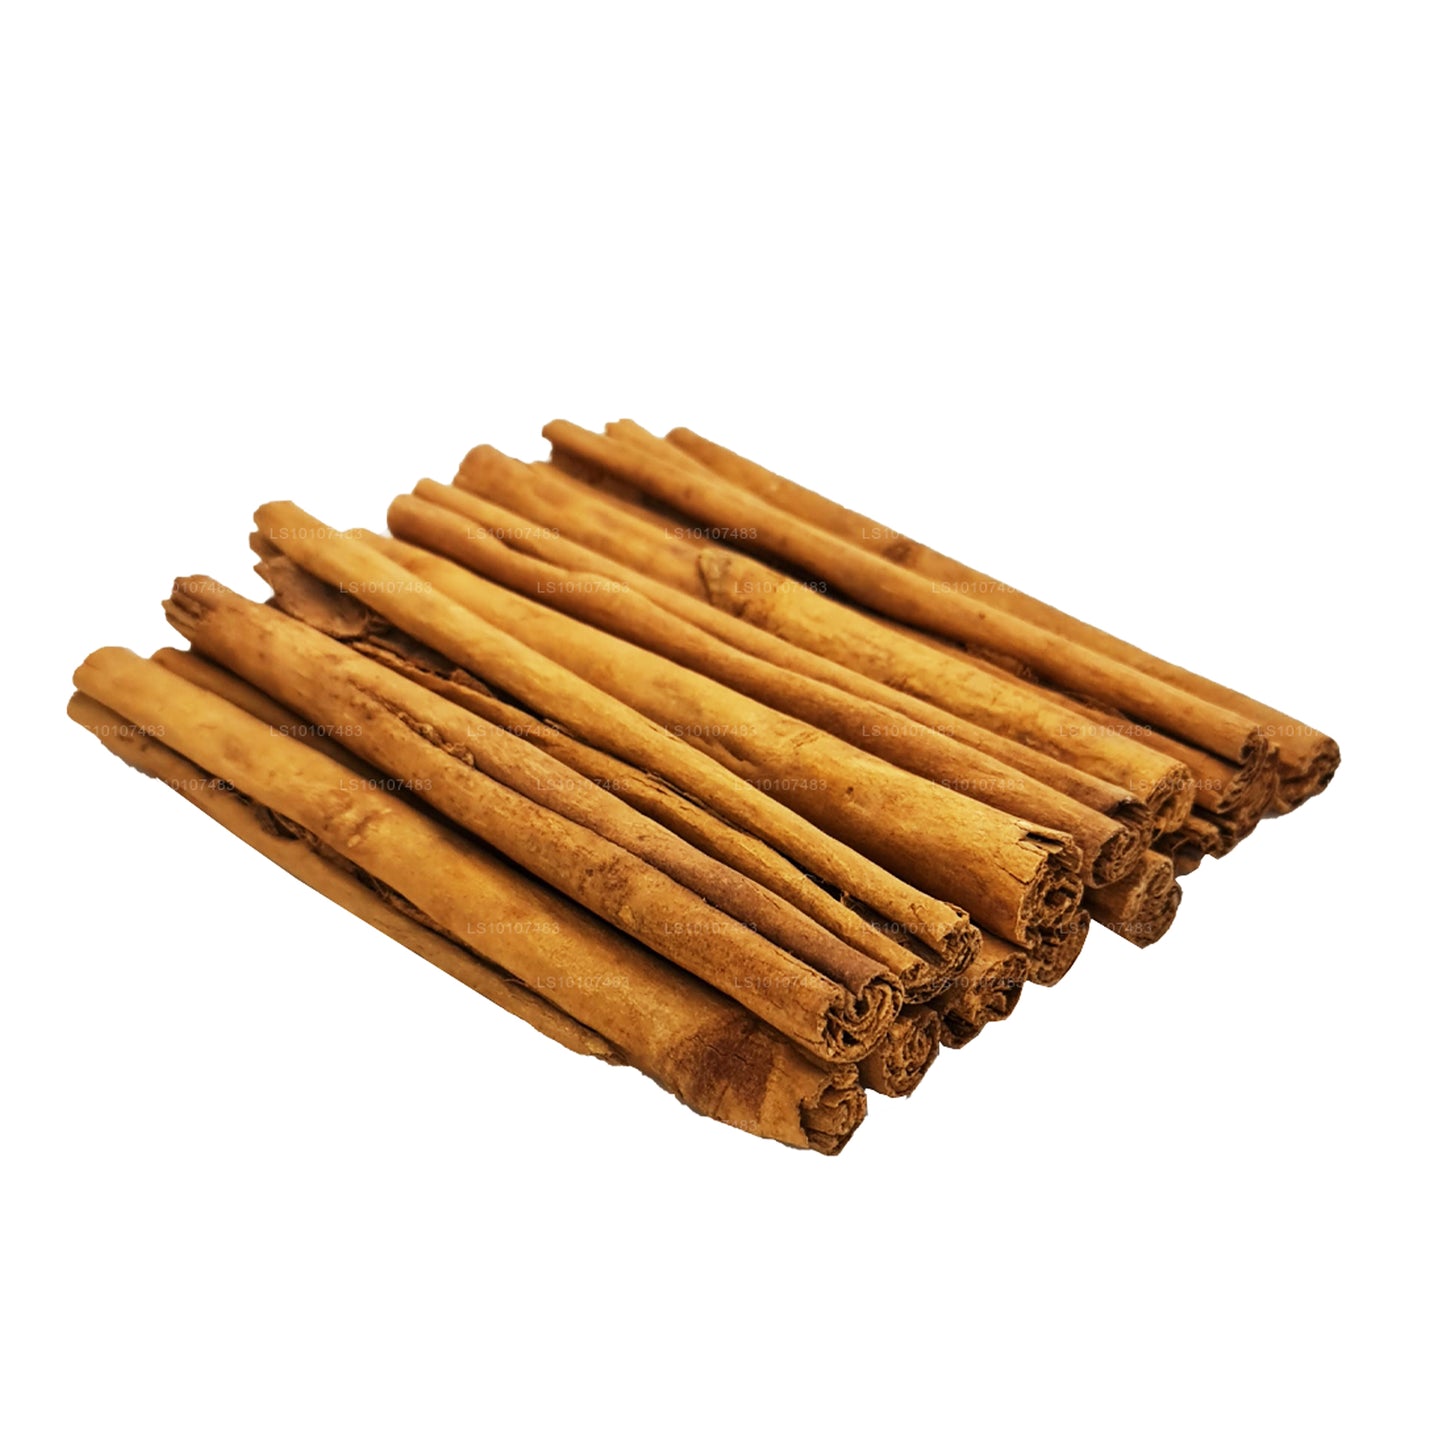 Organic Ceylon Cinnamon Sticks, Authentic "C4/C5" Grade (Quill diameter 16 mm, 5 Inches long) A pack of 27 True Cinnamon Sticks - 3.52 oz, 100g